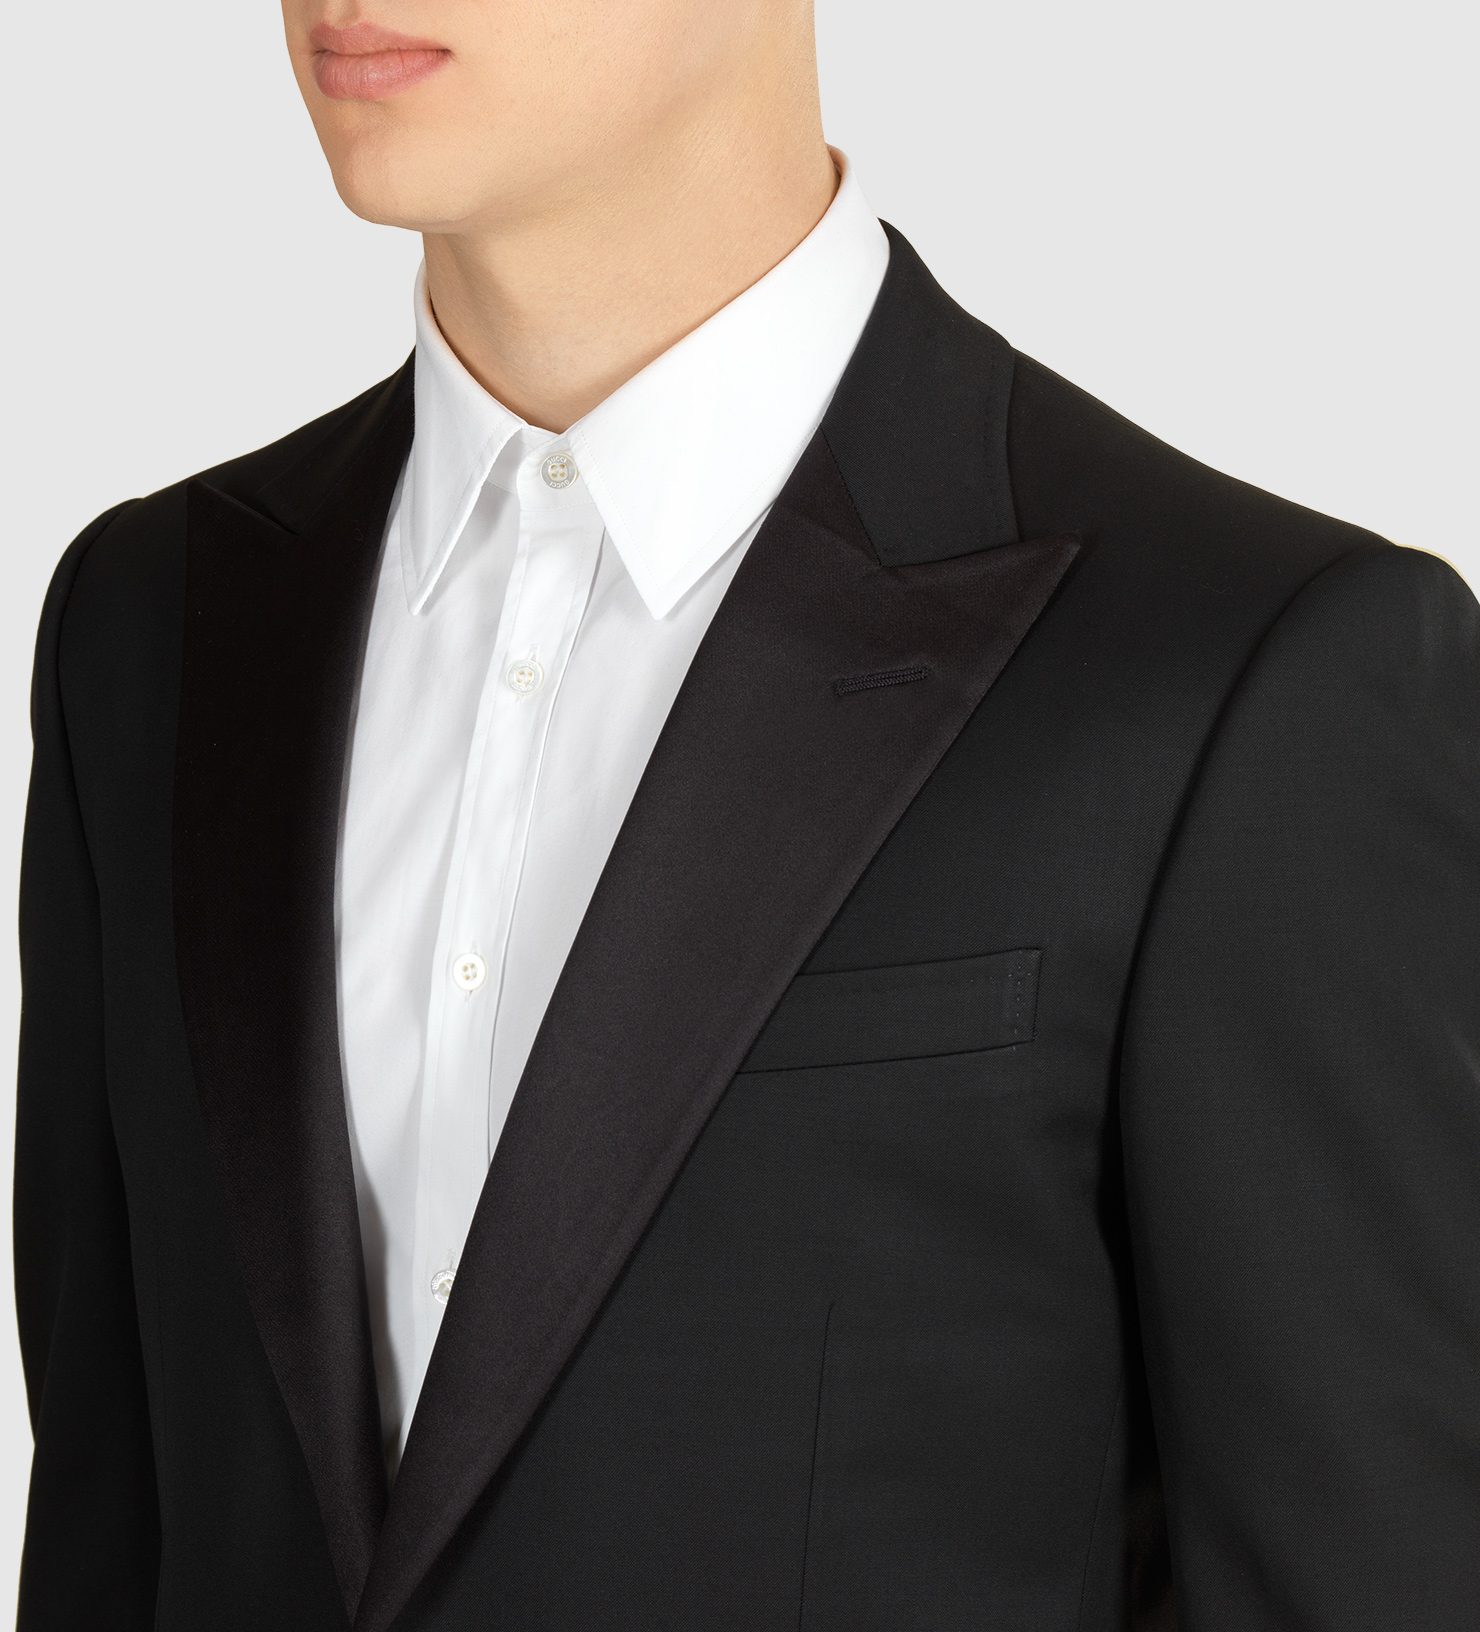 Gucci Signoria Stretch Wool Tuxedo in Black for Men - Lyst